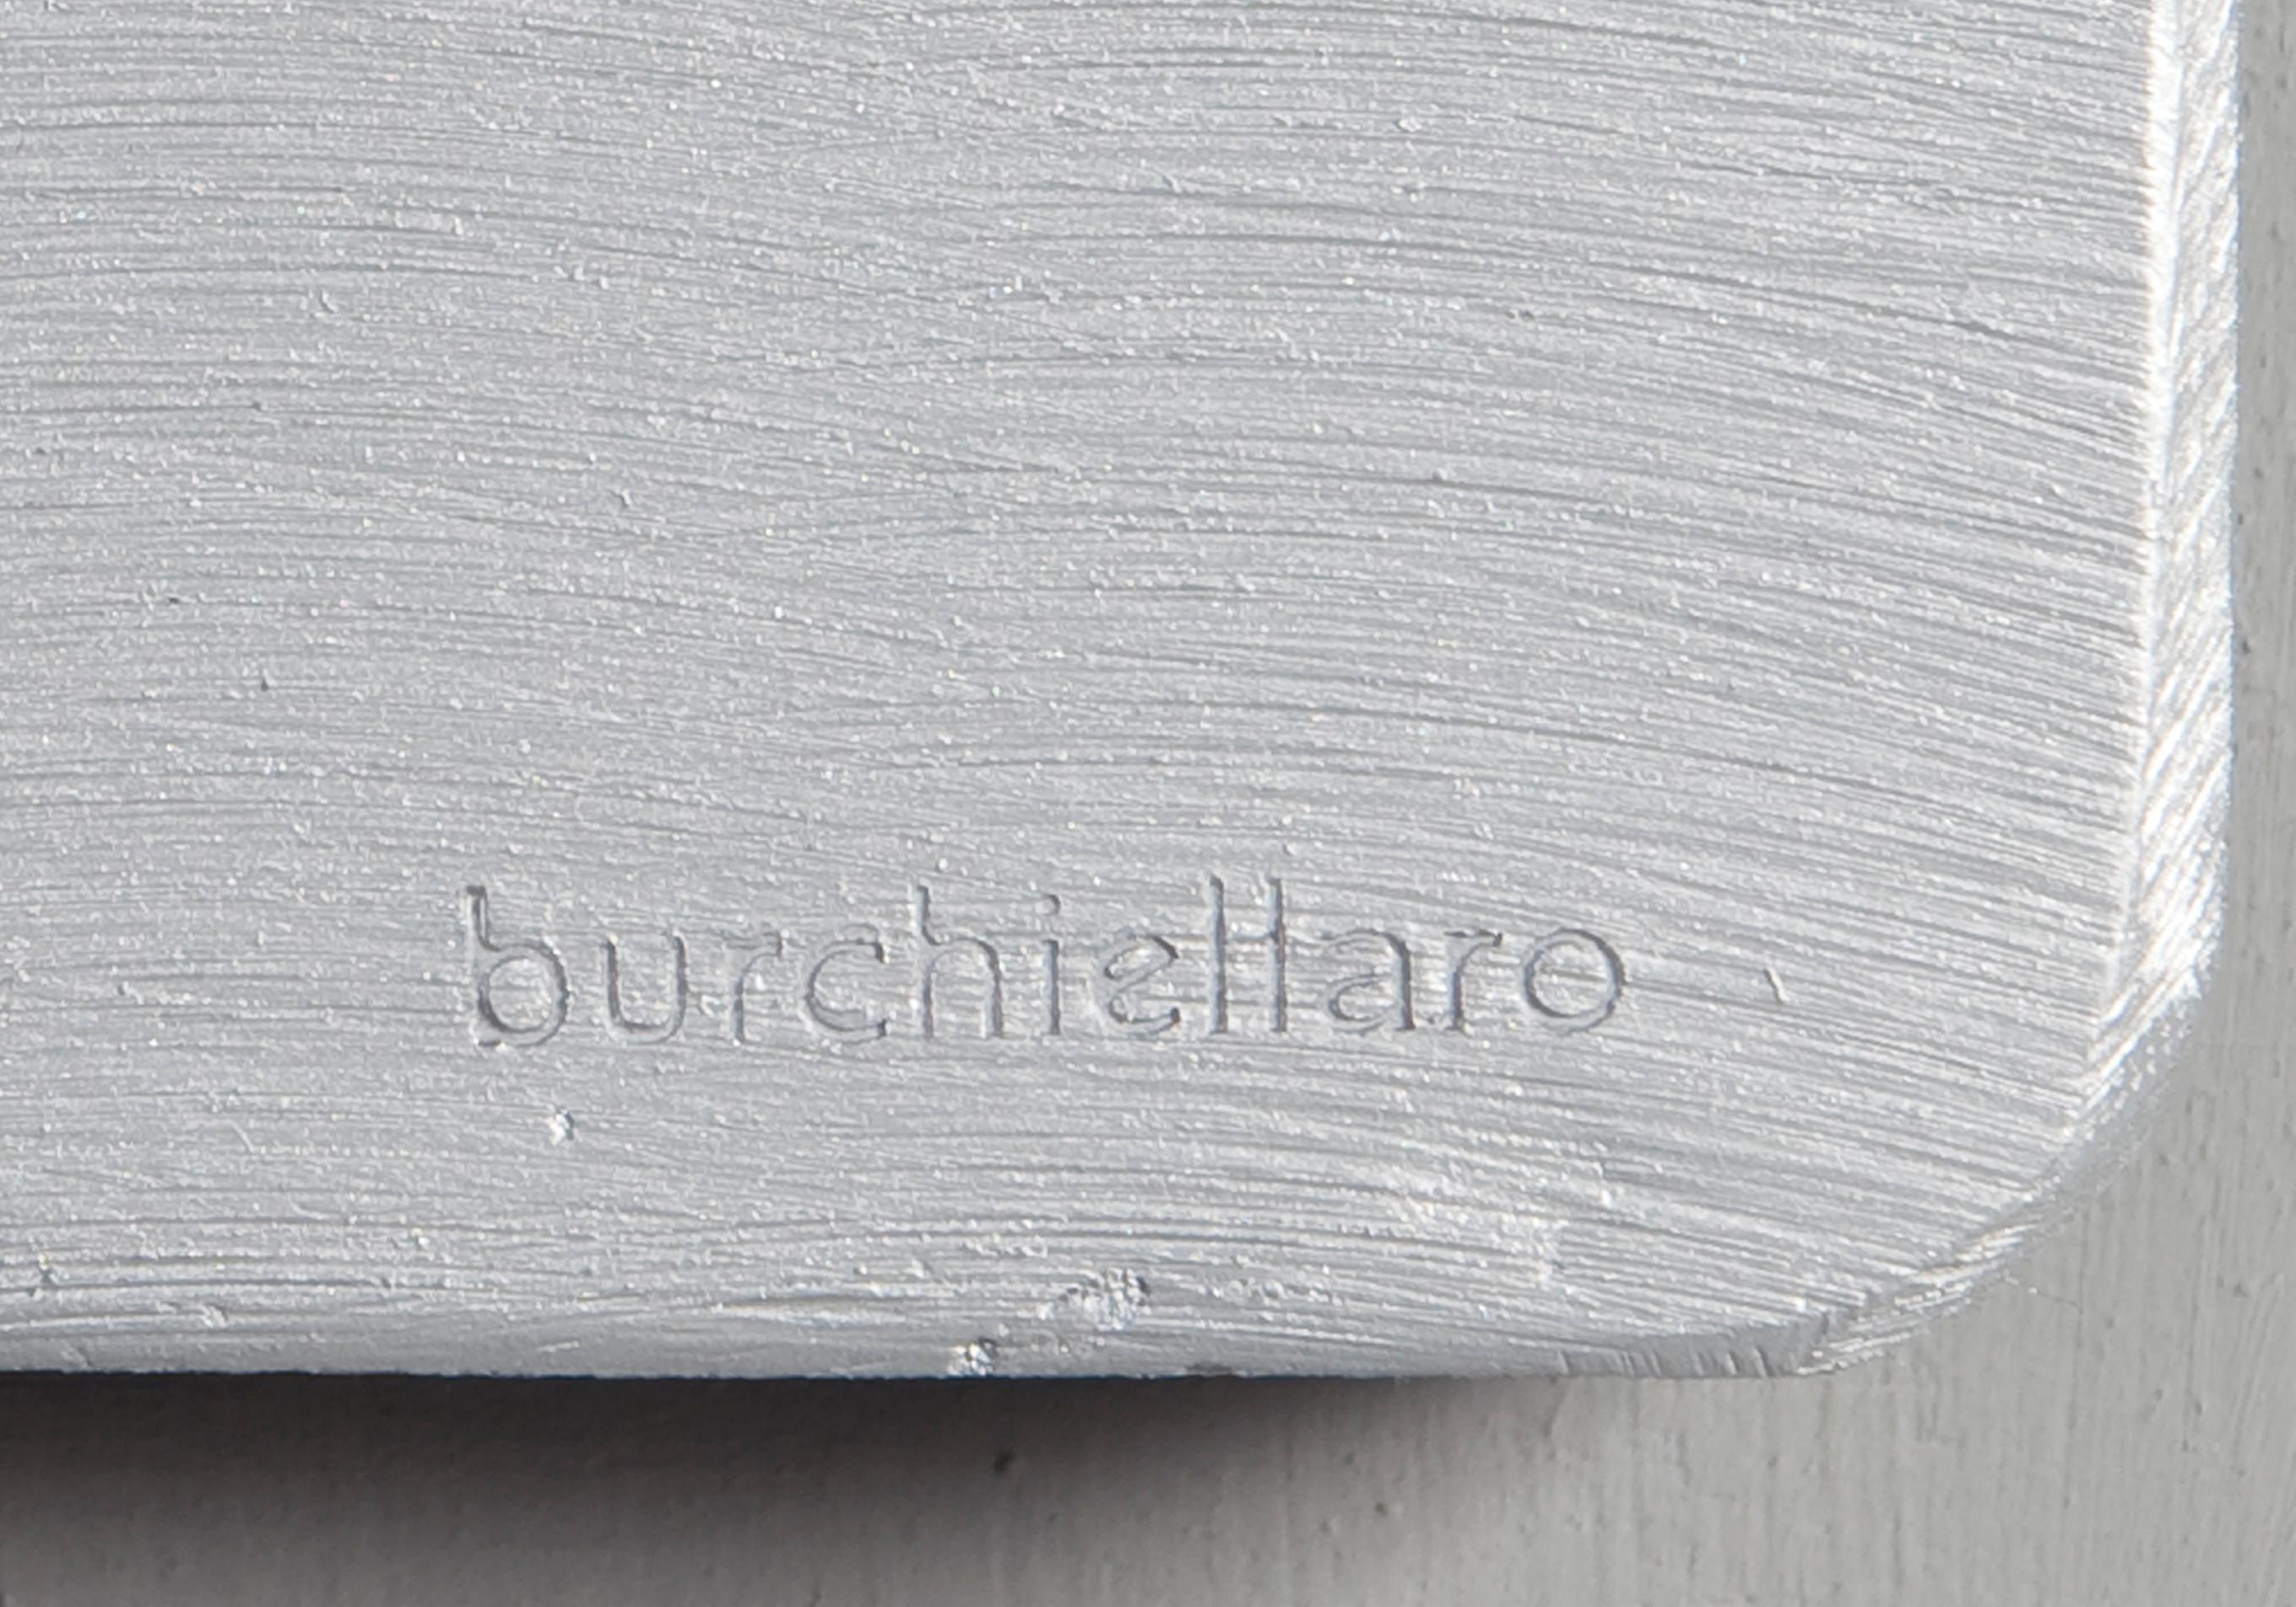 A square etched aluminum mirror signed Burchiellaro.